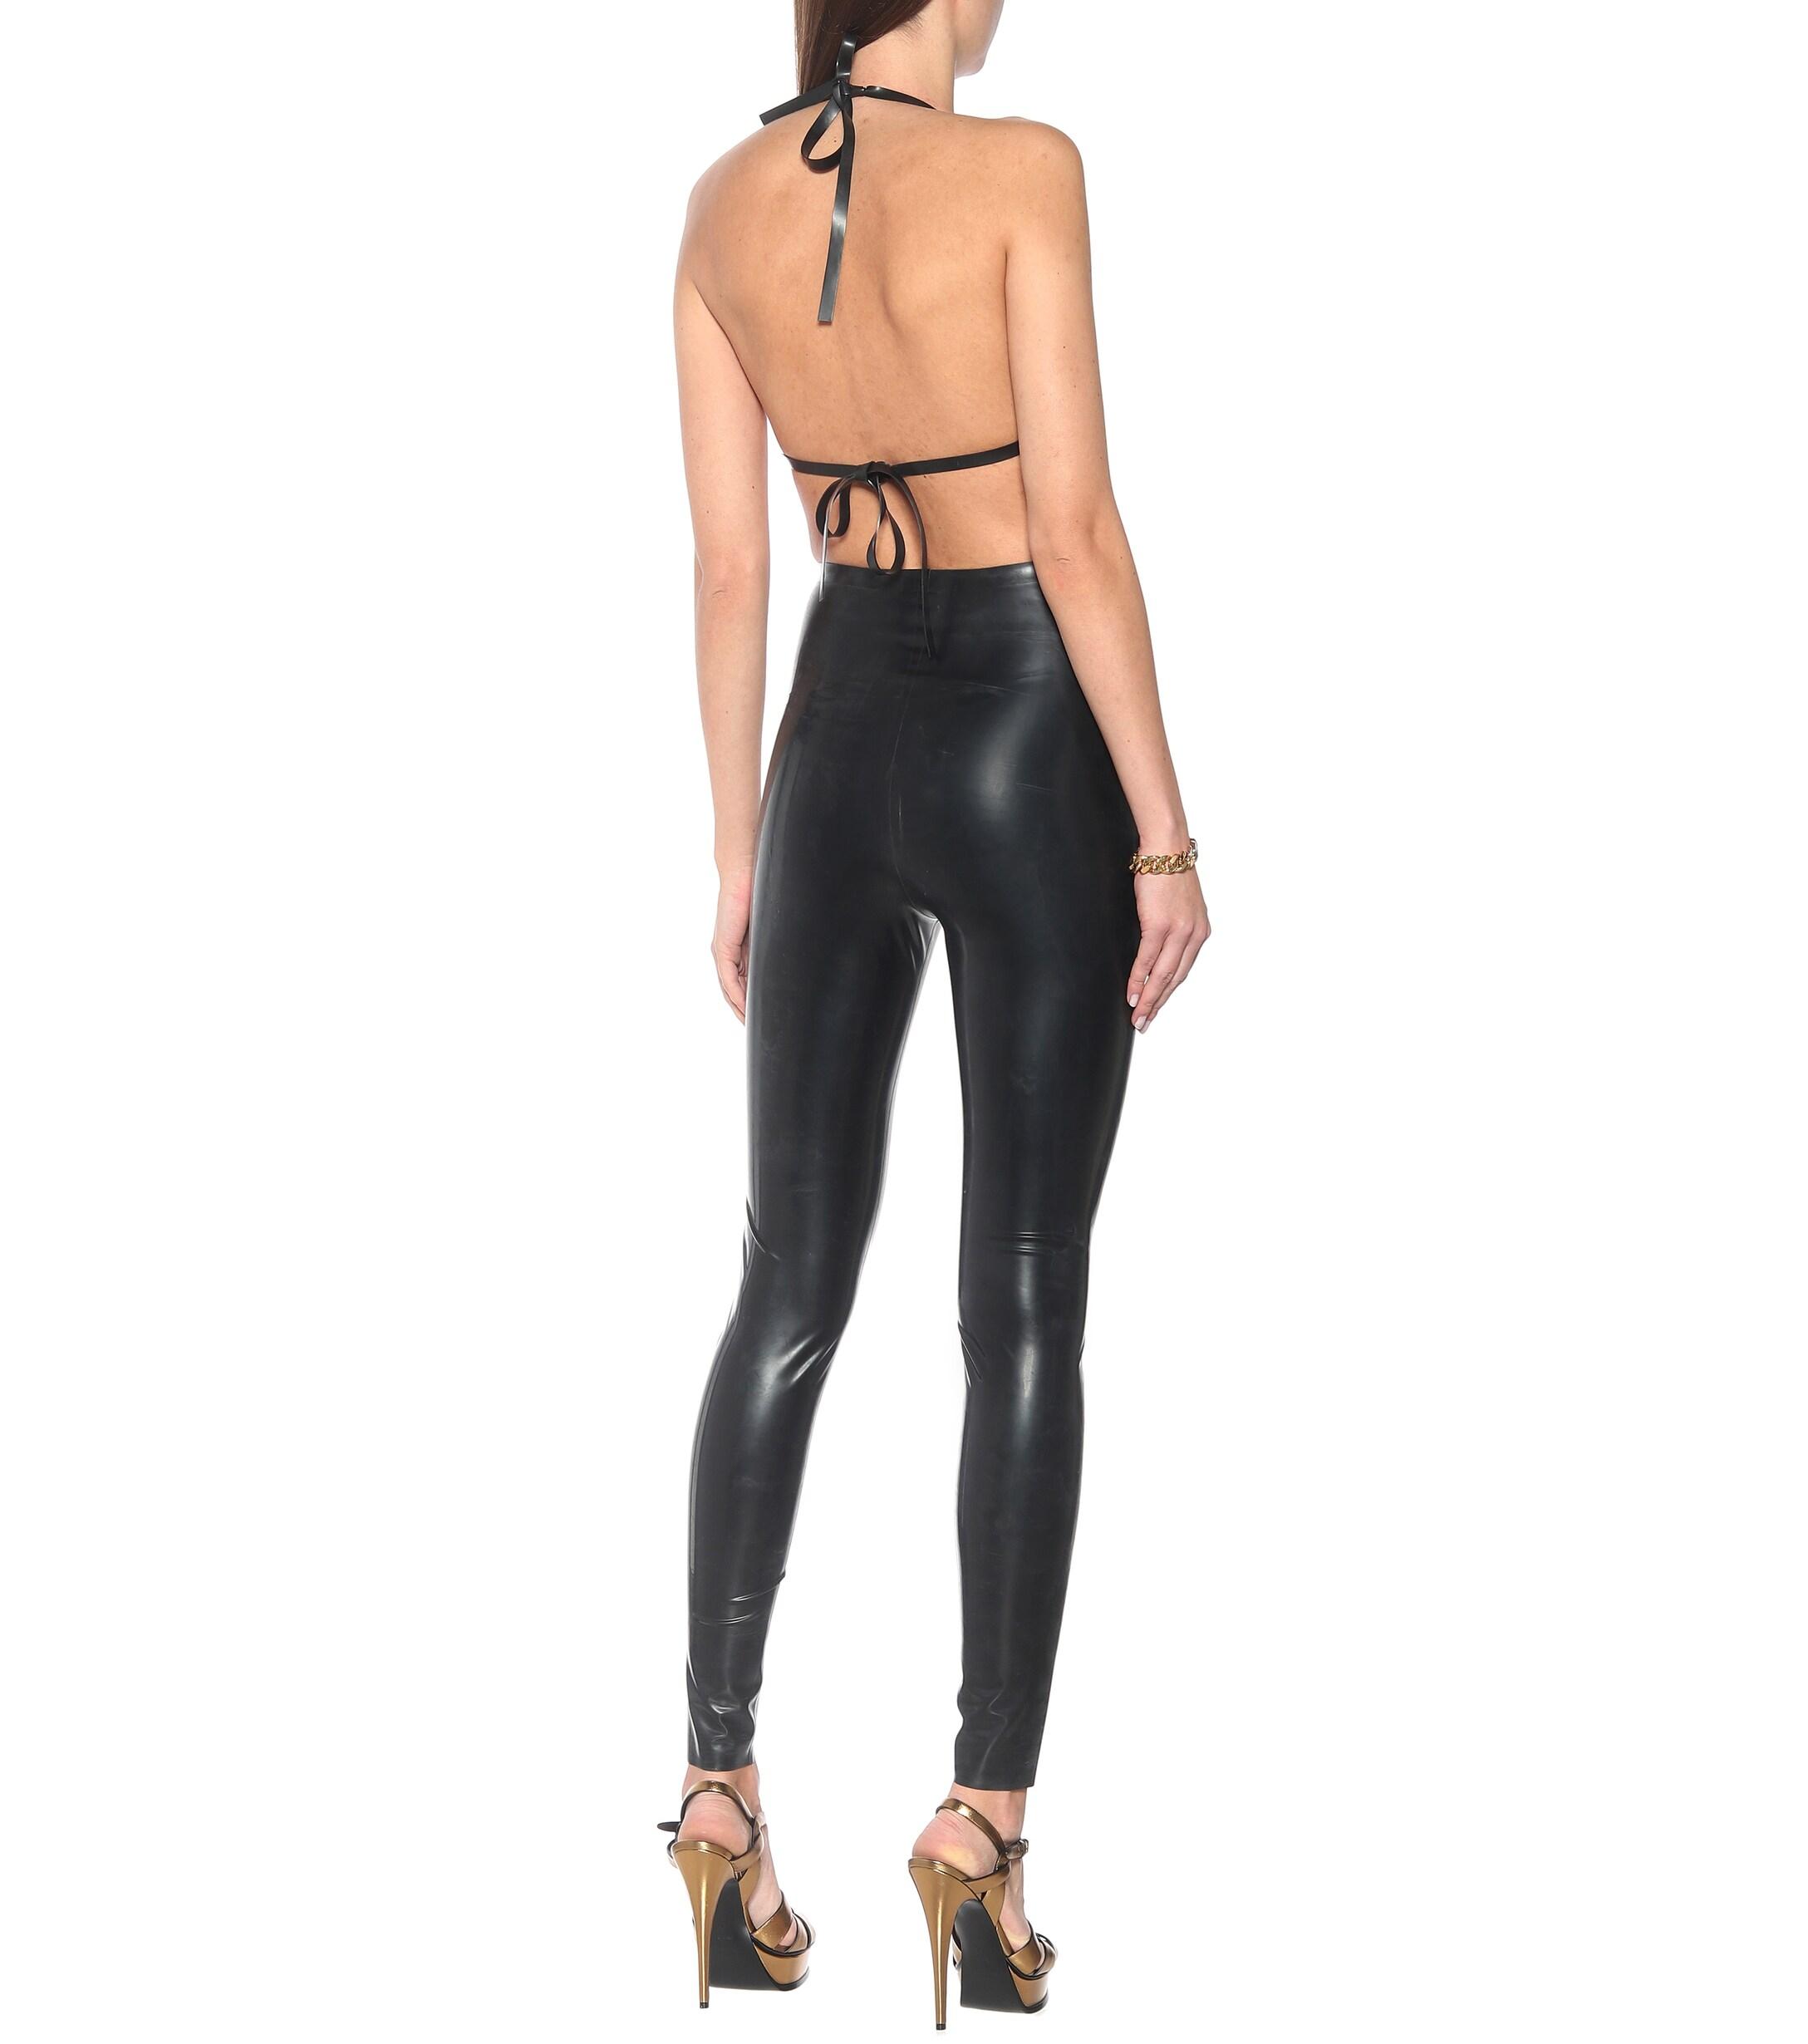 Saint Laurent Rubber Latex Bikini Top in Black | Lyst